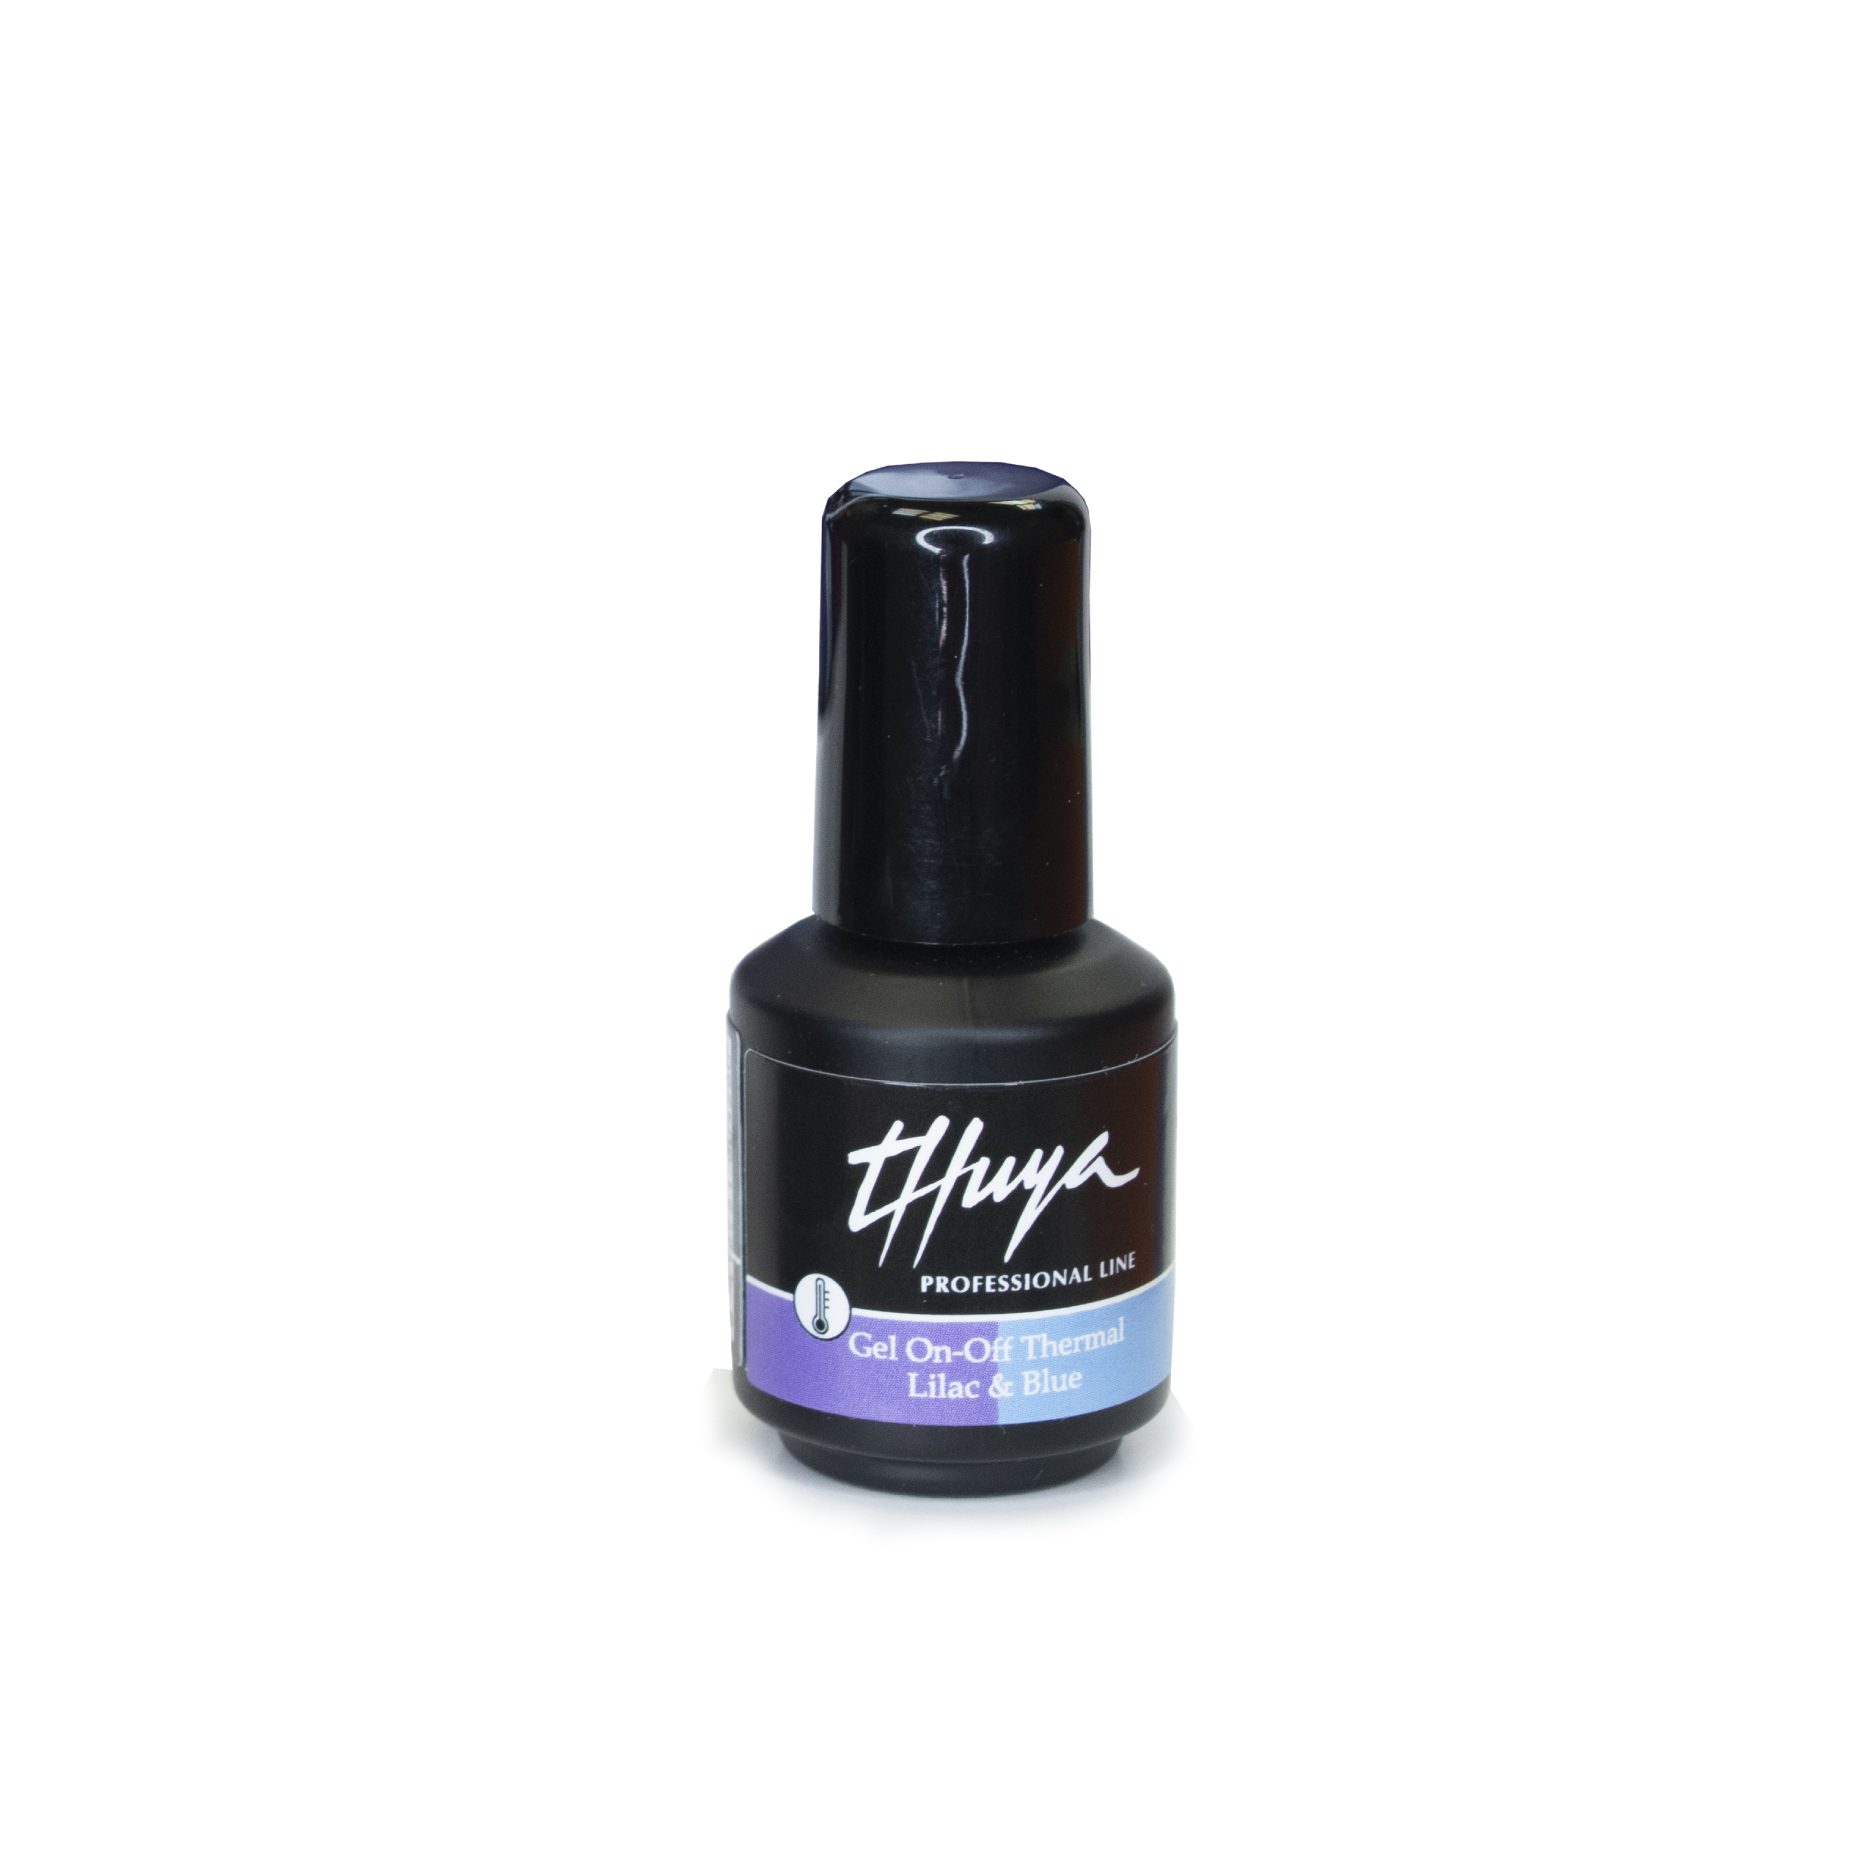 THUYA permanent nail polish gel On-Off Thermal Géllakk-Lilac&Blue 7 ml